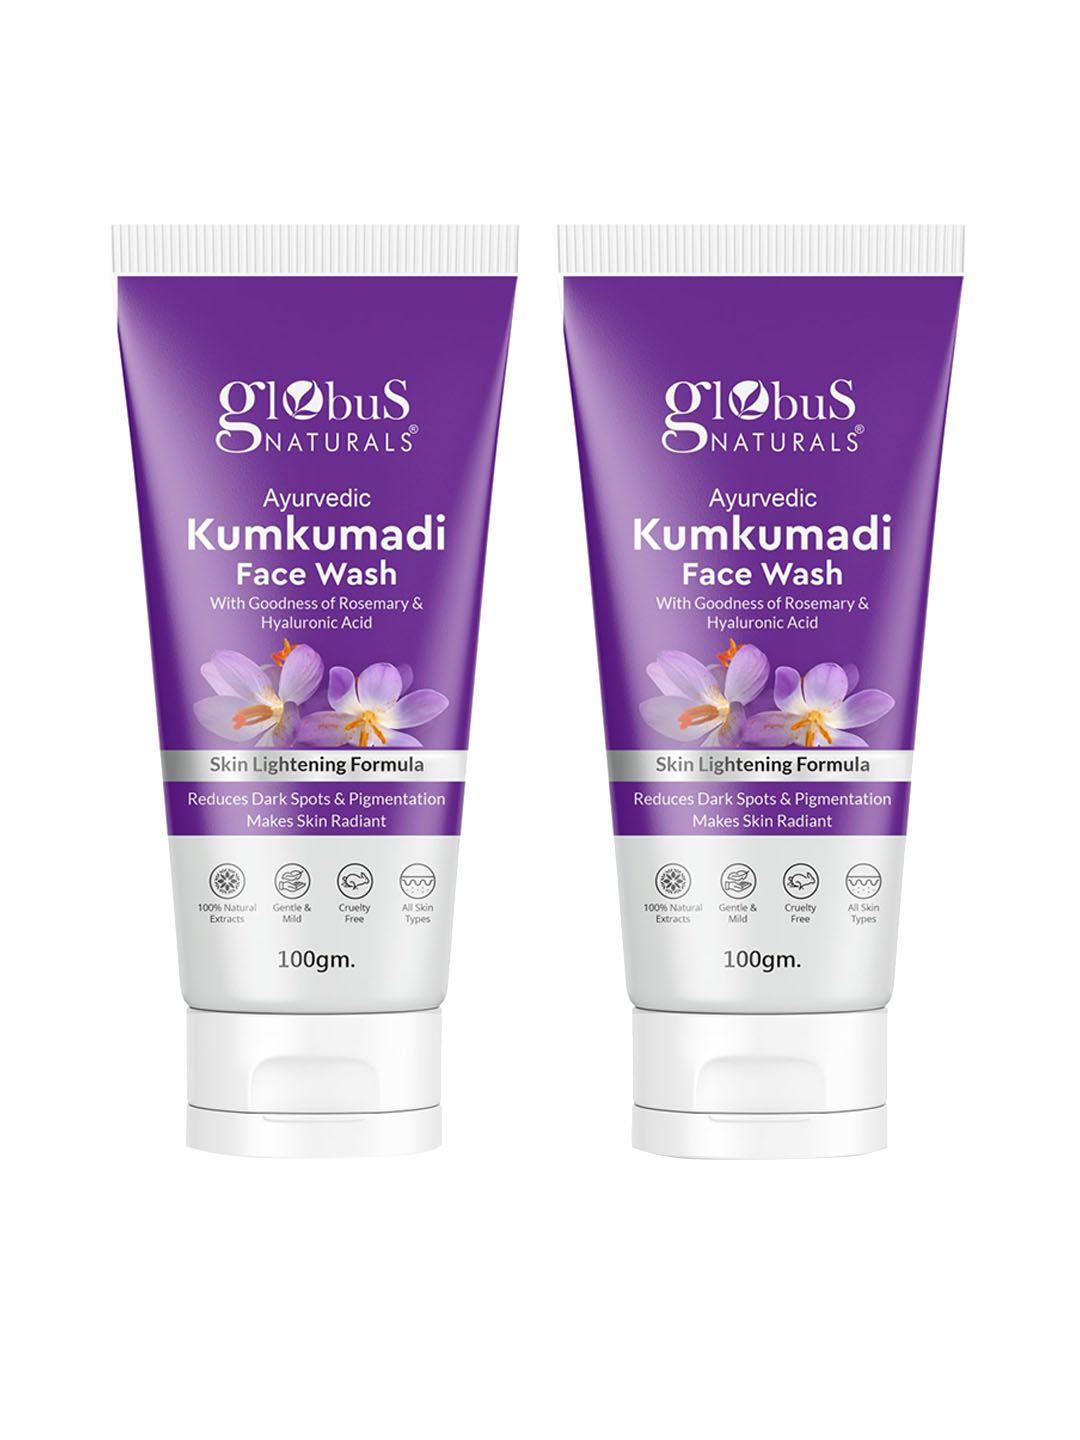 globus naturals ayurvedic set of 2 kumkumadi skin lightening face wash - 100gm each